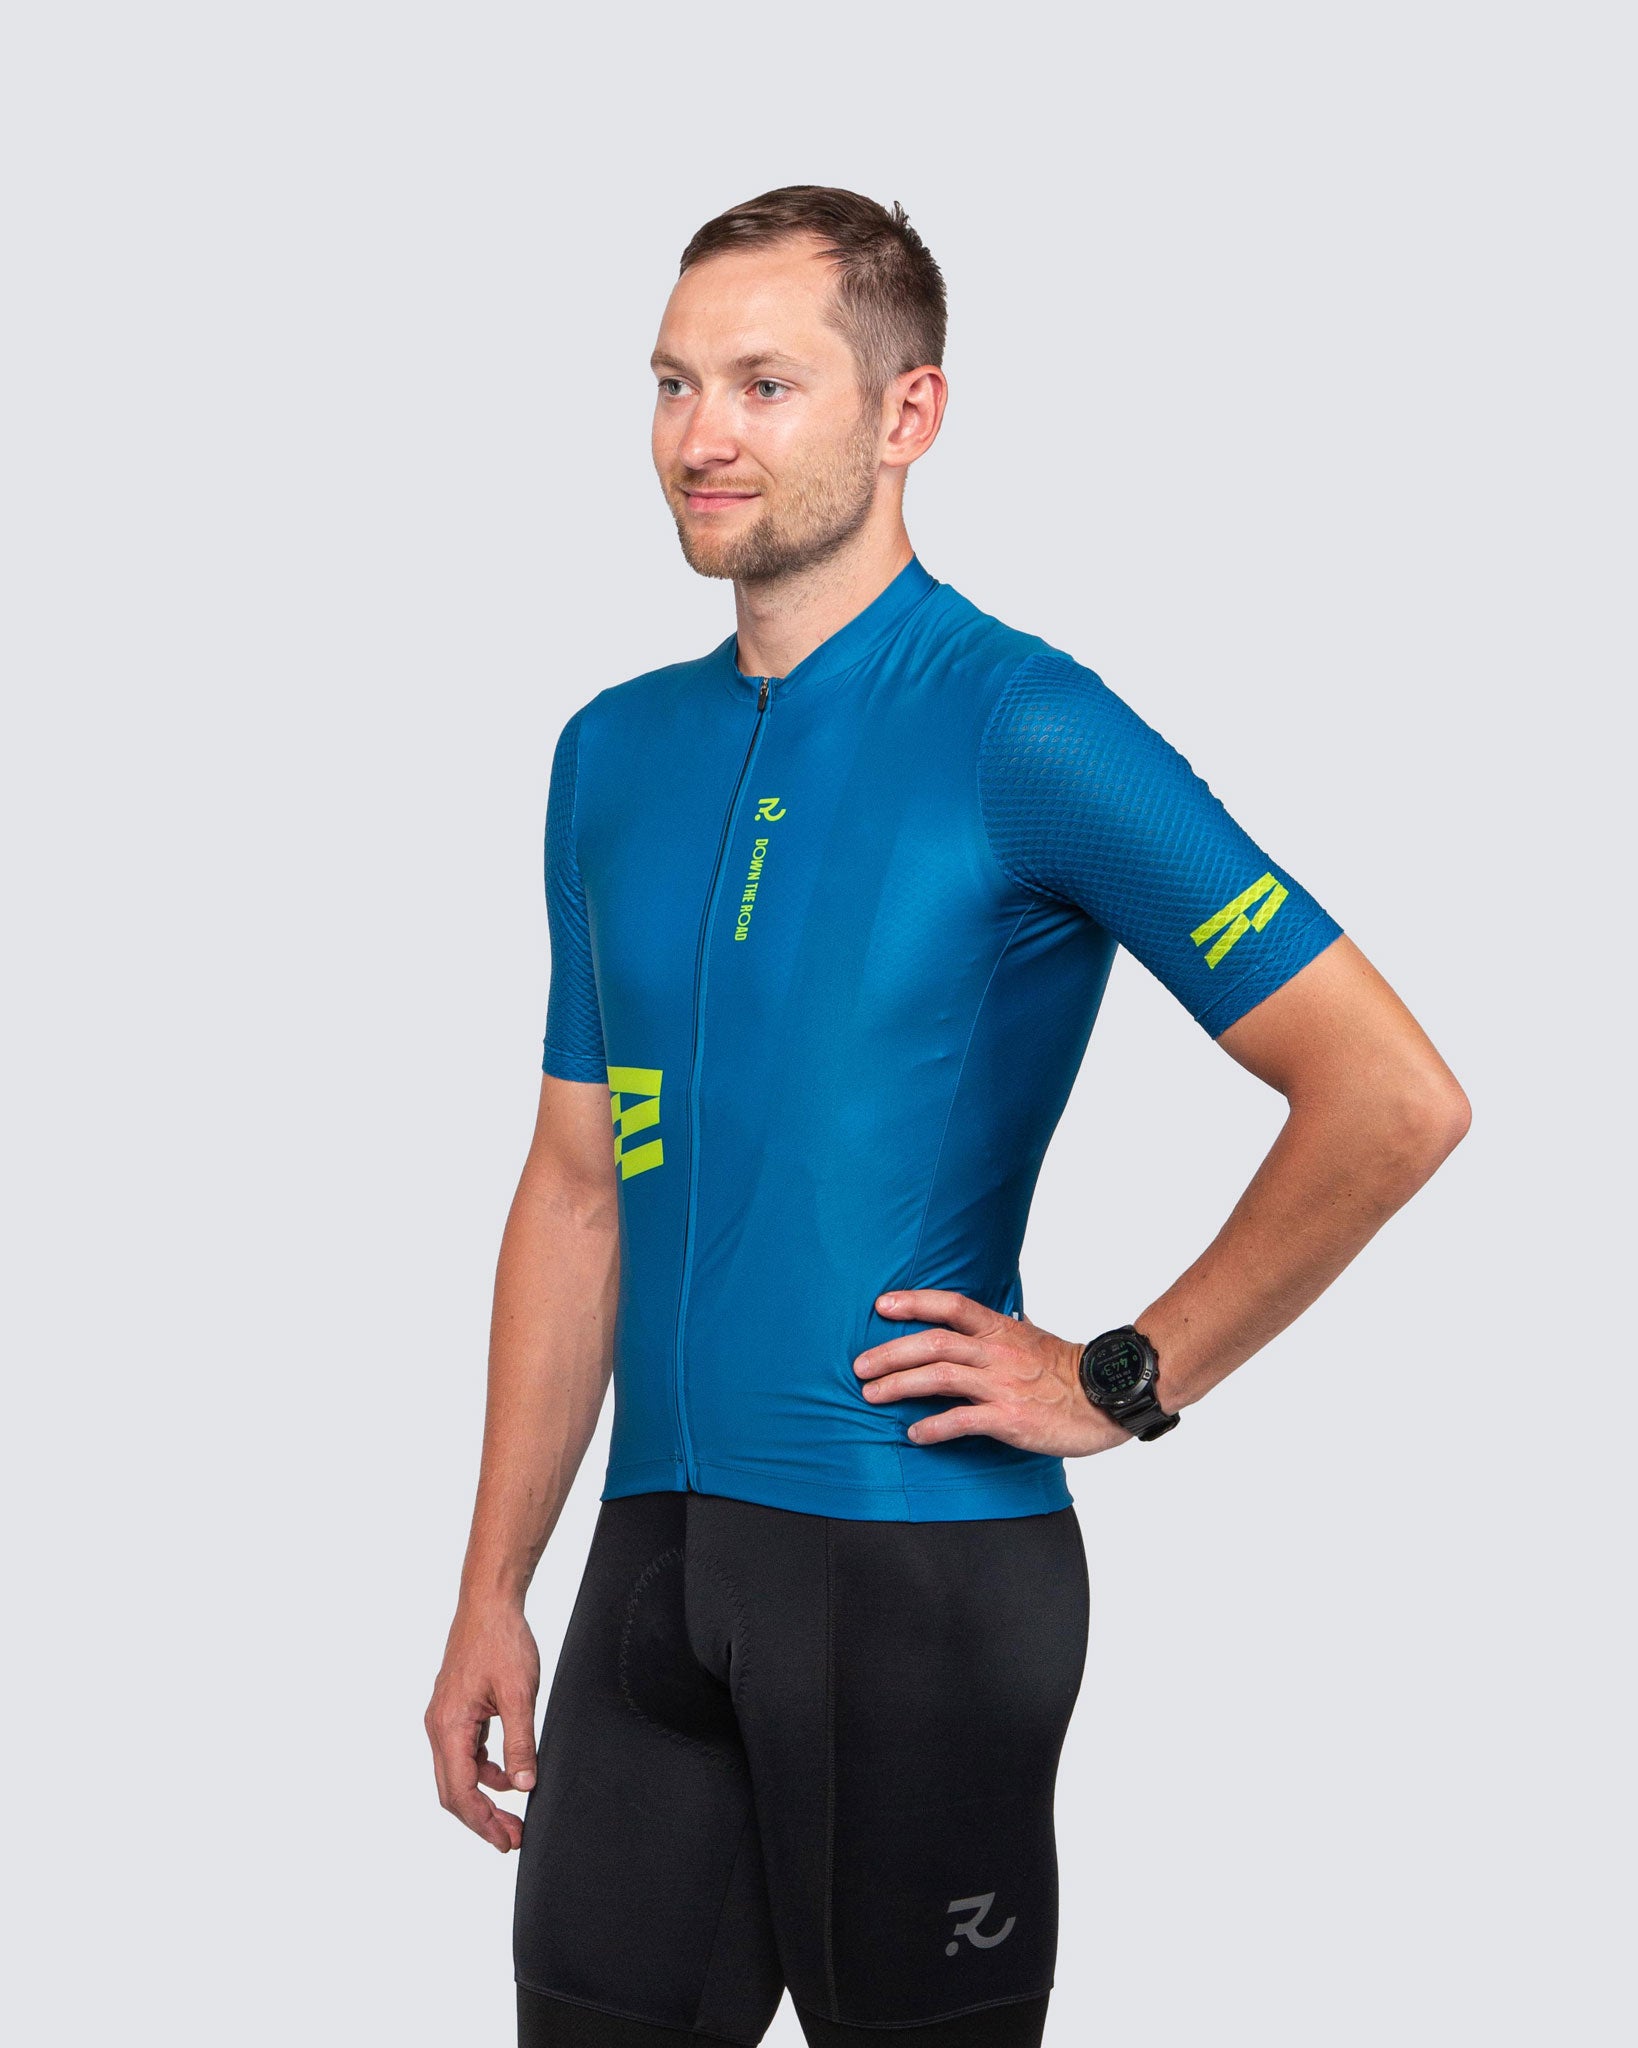 man wearing blue cycling jersey and black bib shorts